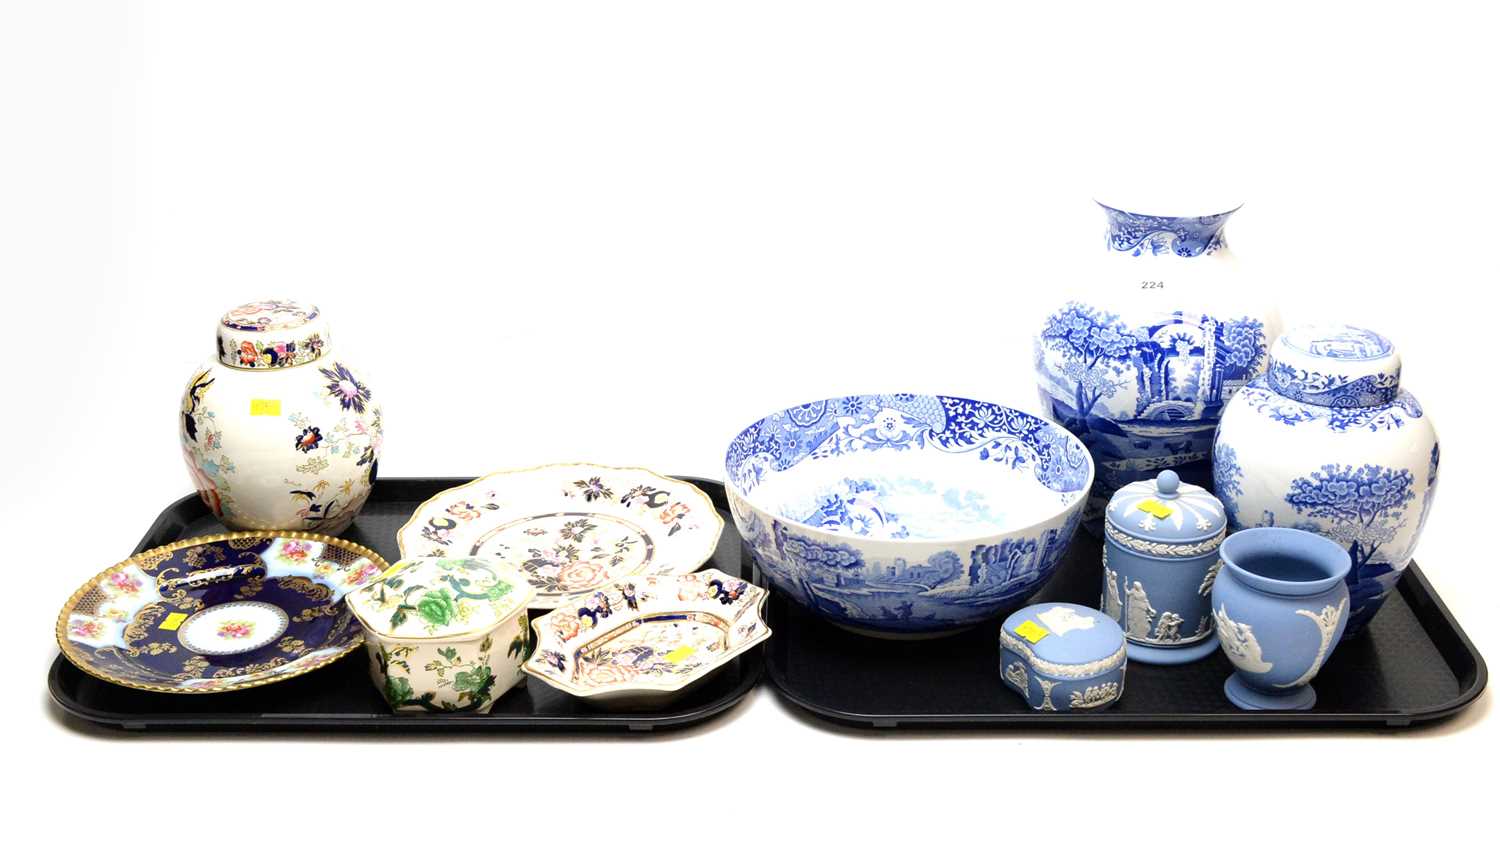 A selection of British decorative ceramic wares.